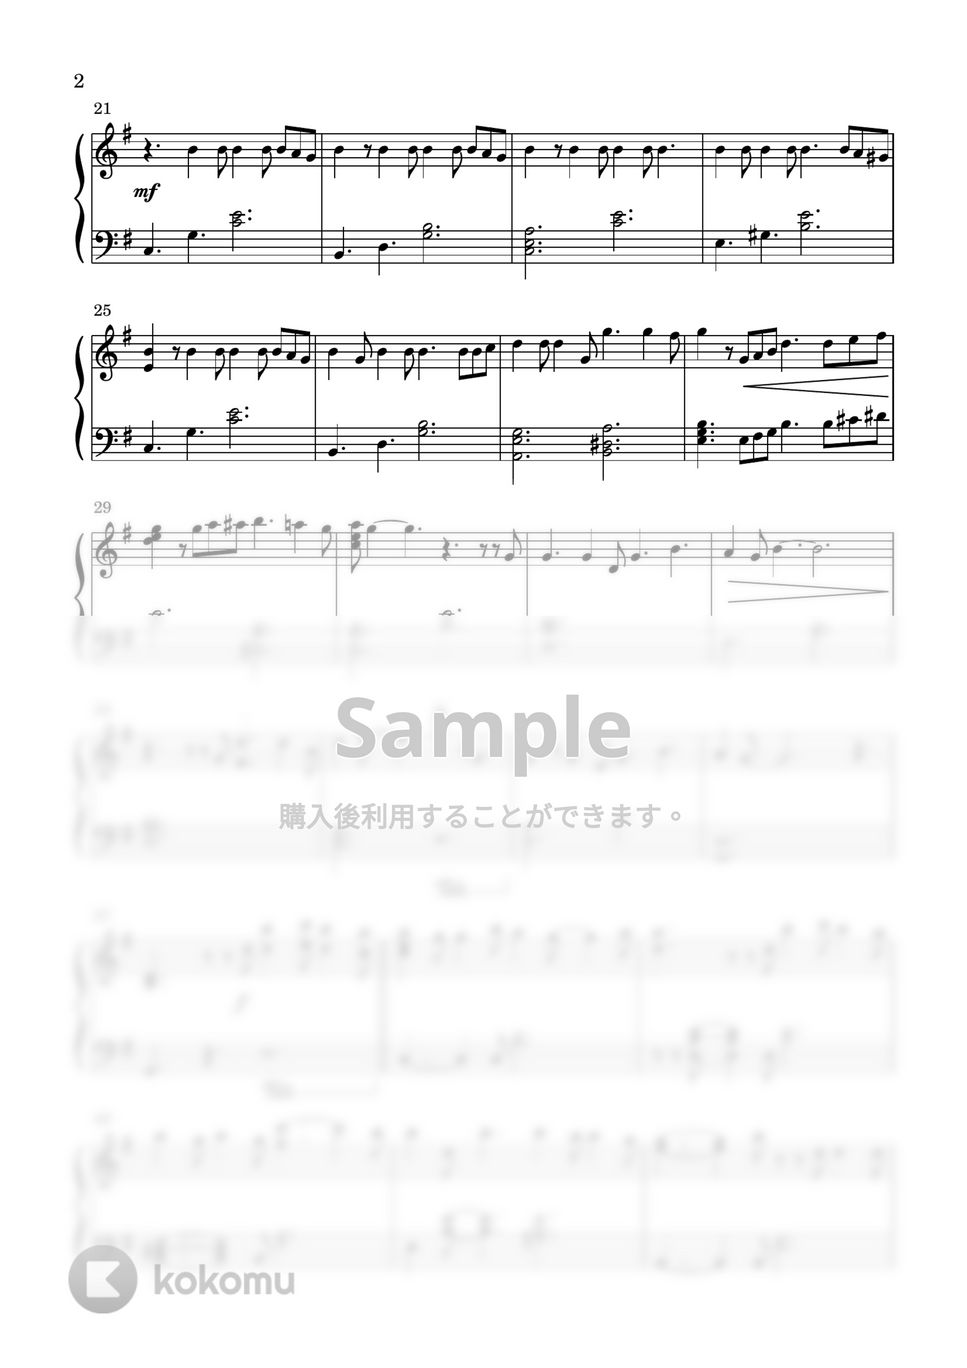 Official髭男dism - Subtitle (ピアノ/ソロ) by harupi